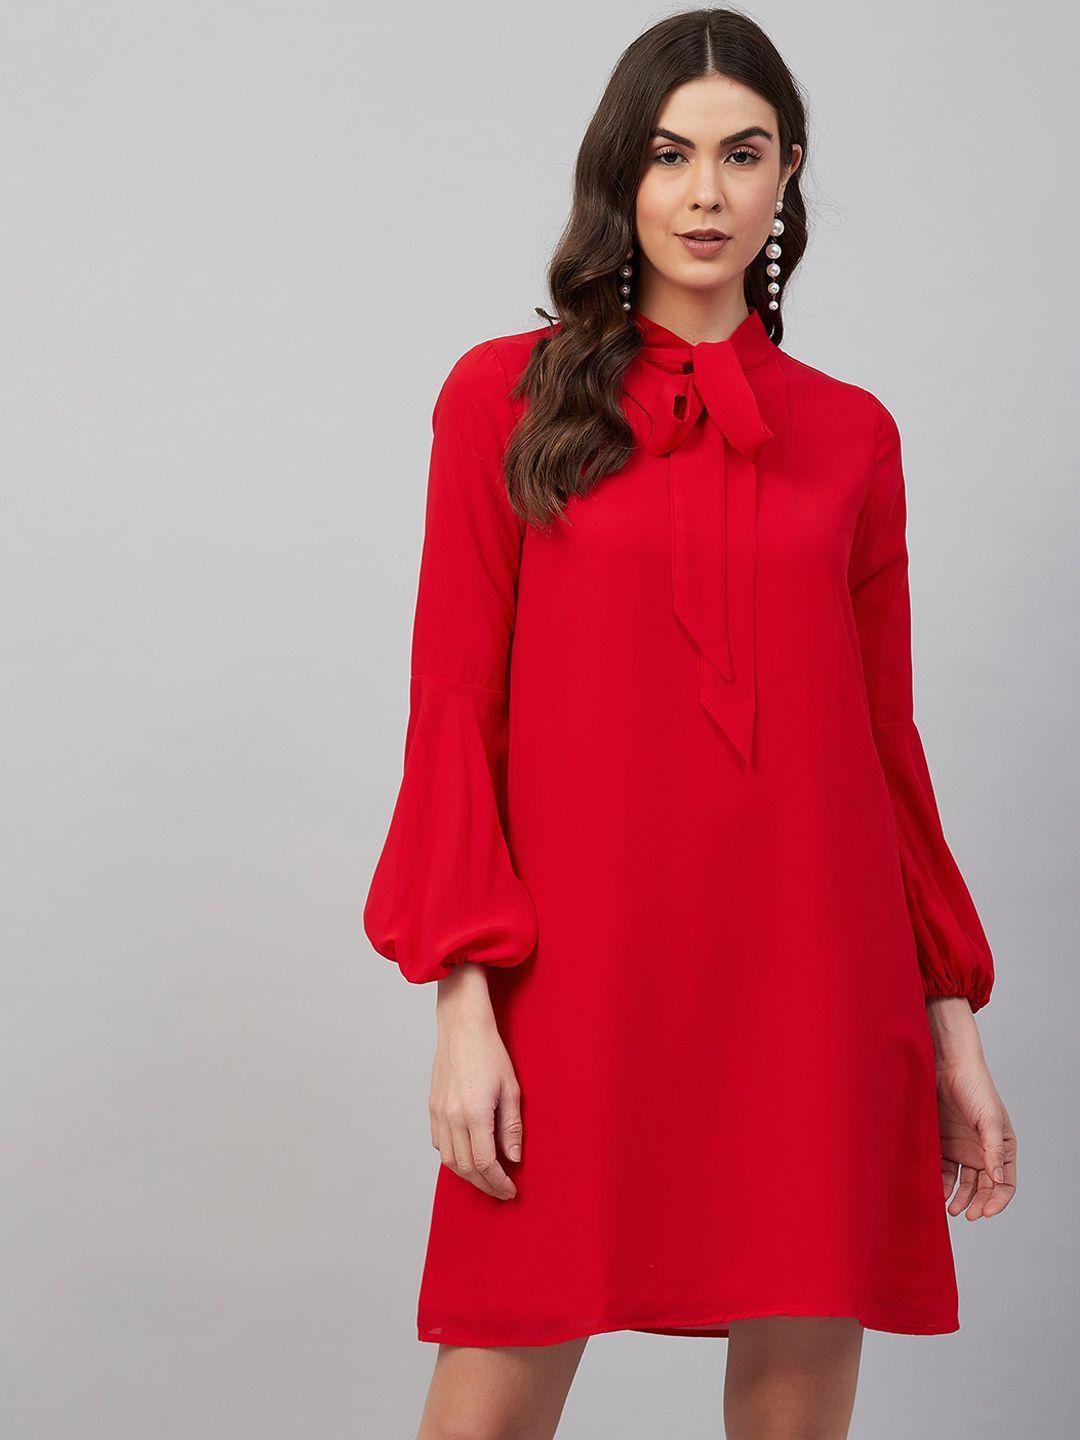 carlton london women red solid a-line dress